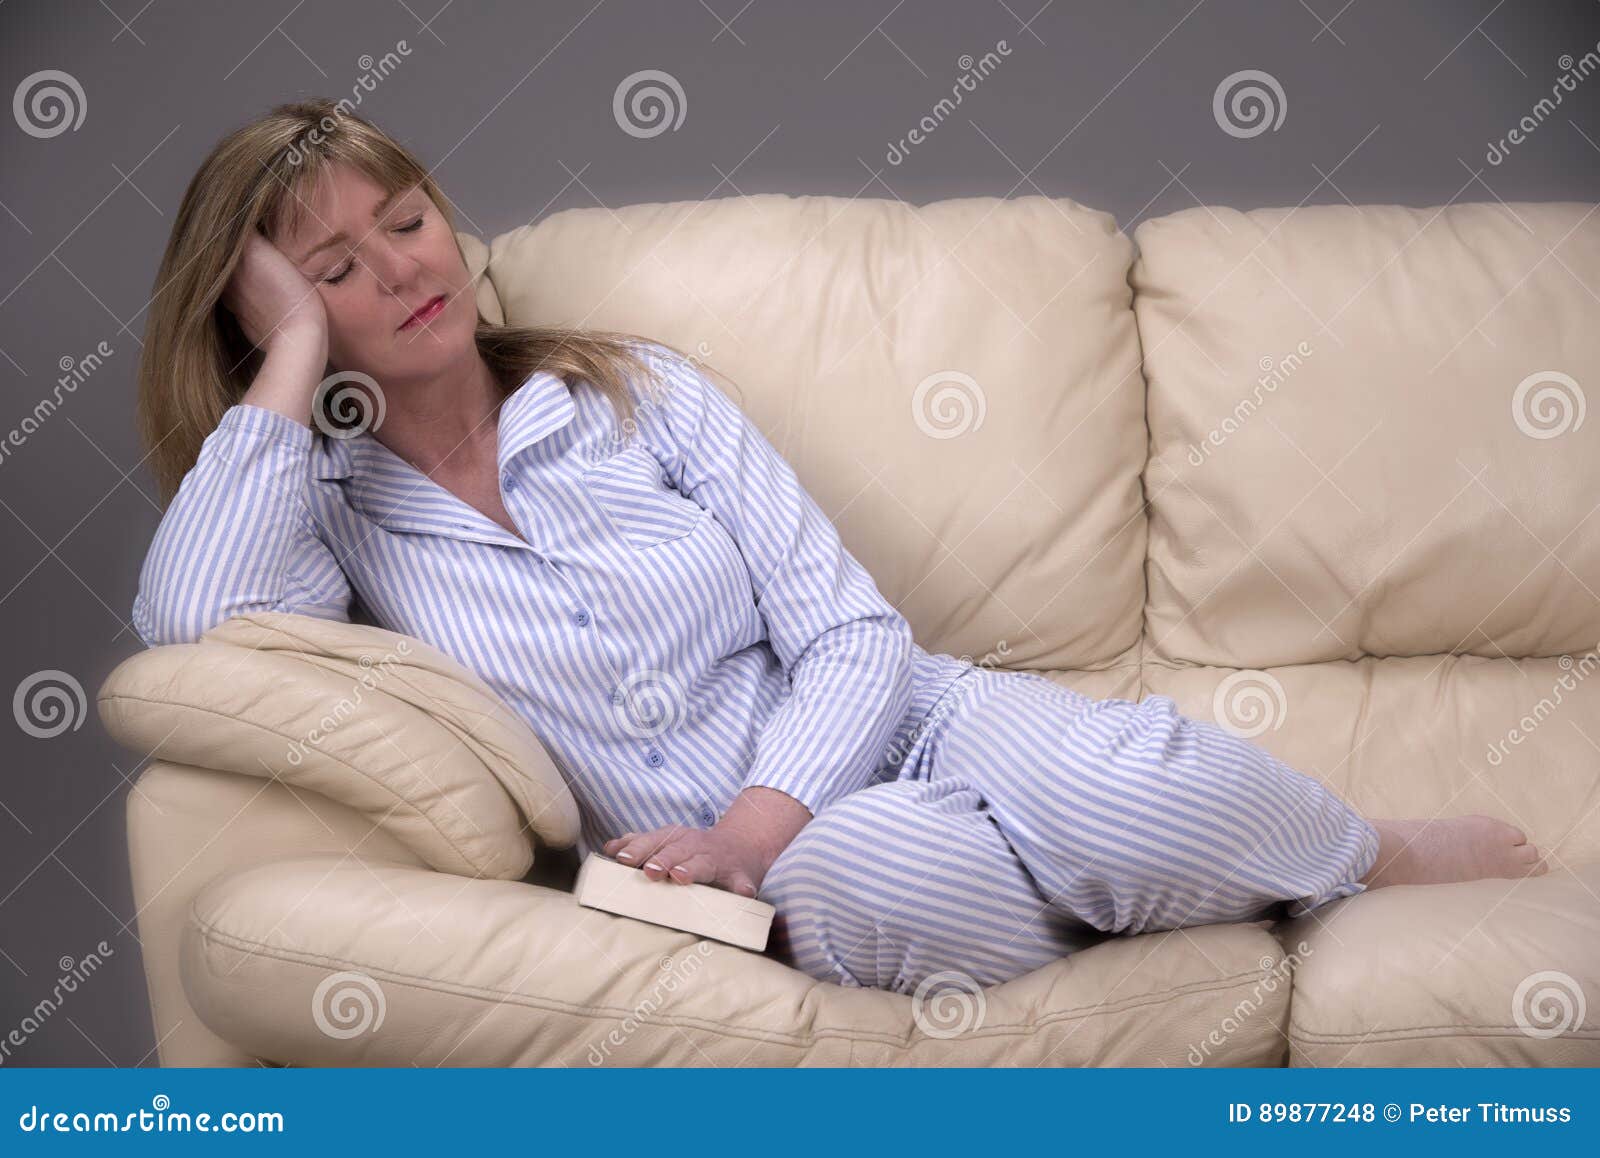 Verbieden beet Afstotend Woman in Pyjamas Sleeping on a Sofa Stock Photo - Image of asleep, person:  89877248